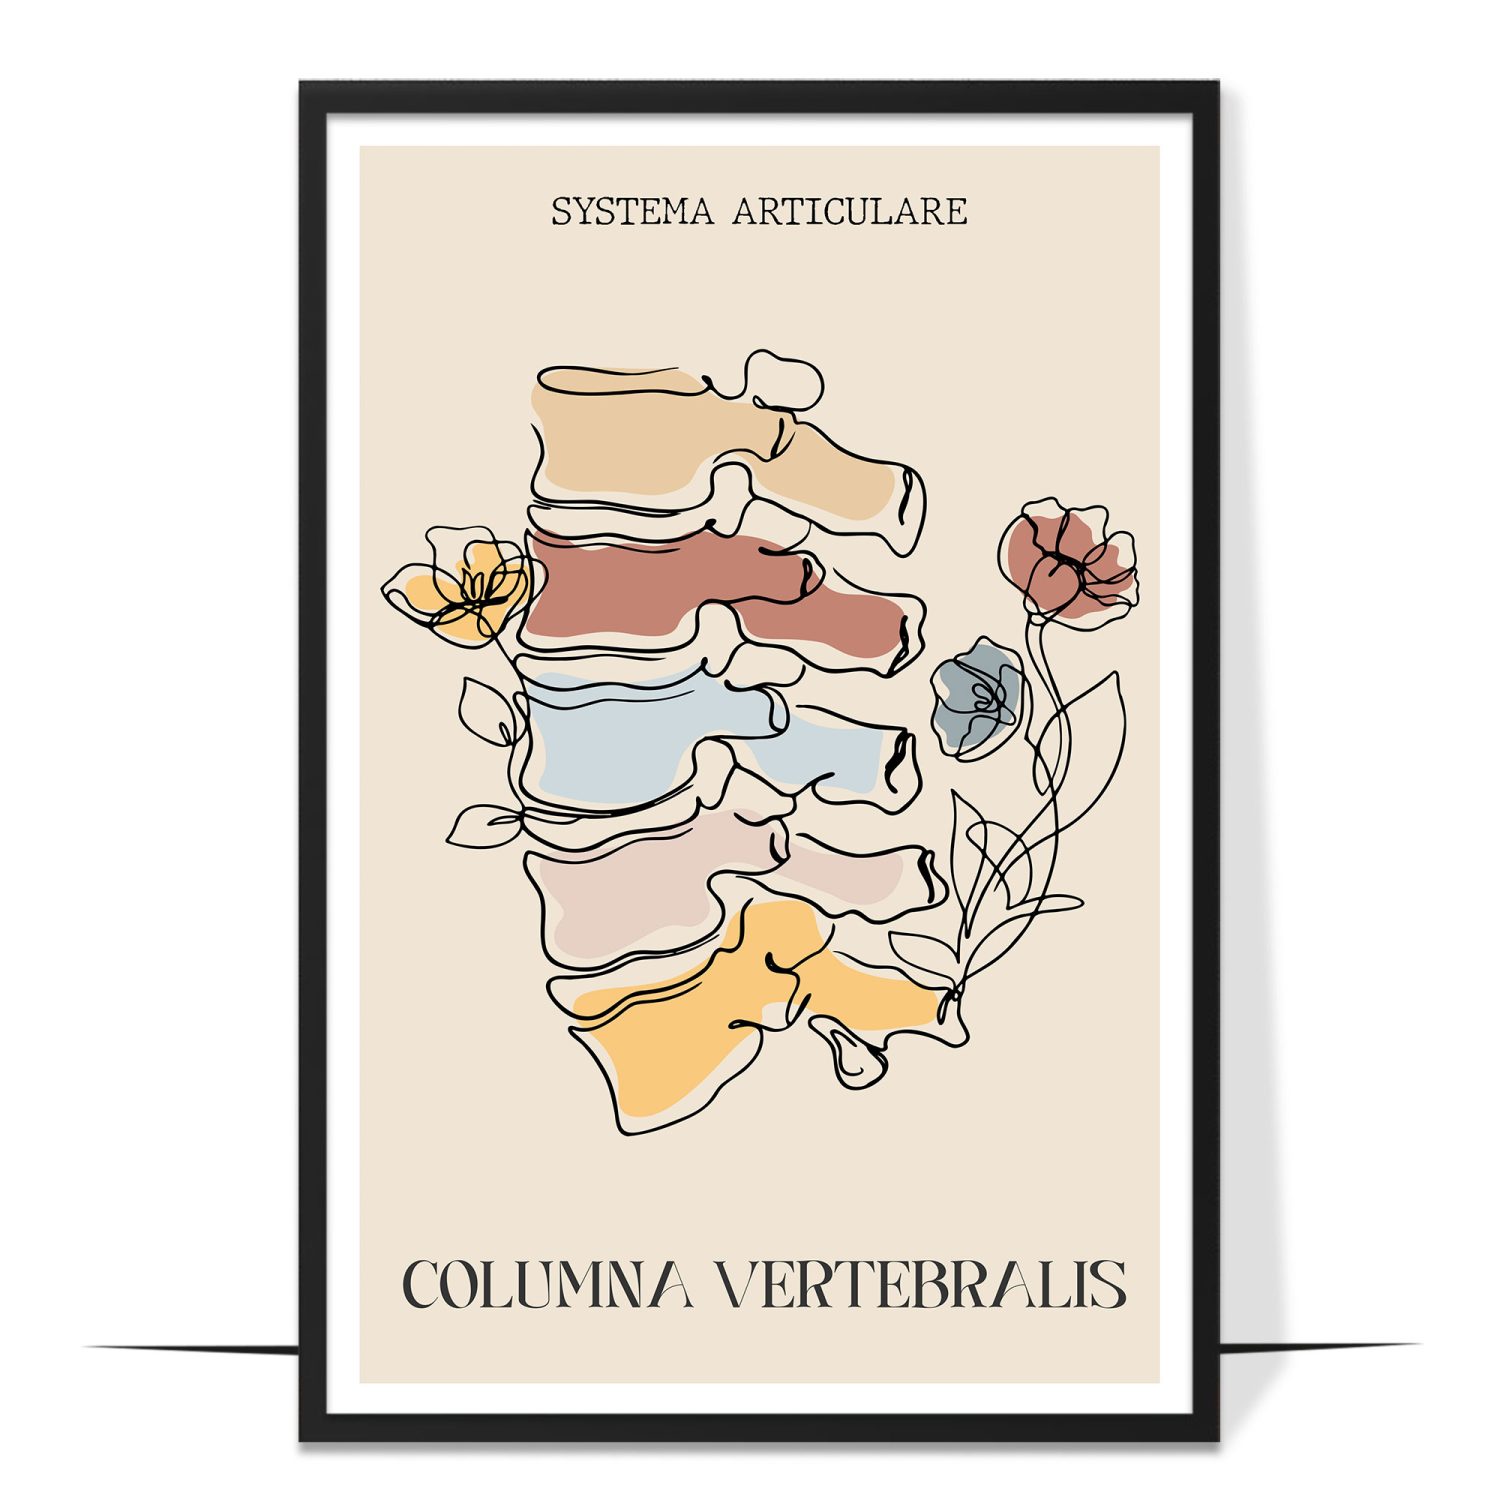 Abstract Columna Vertebralis Anatomy Poster